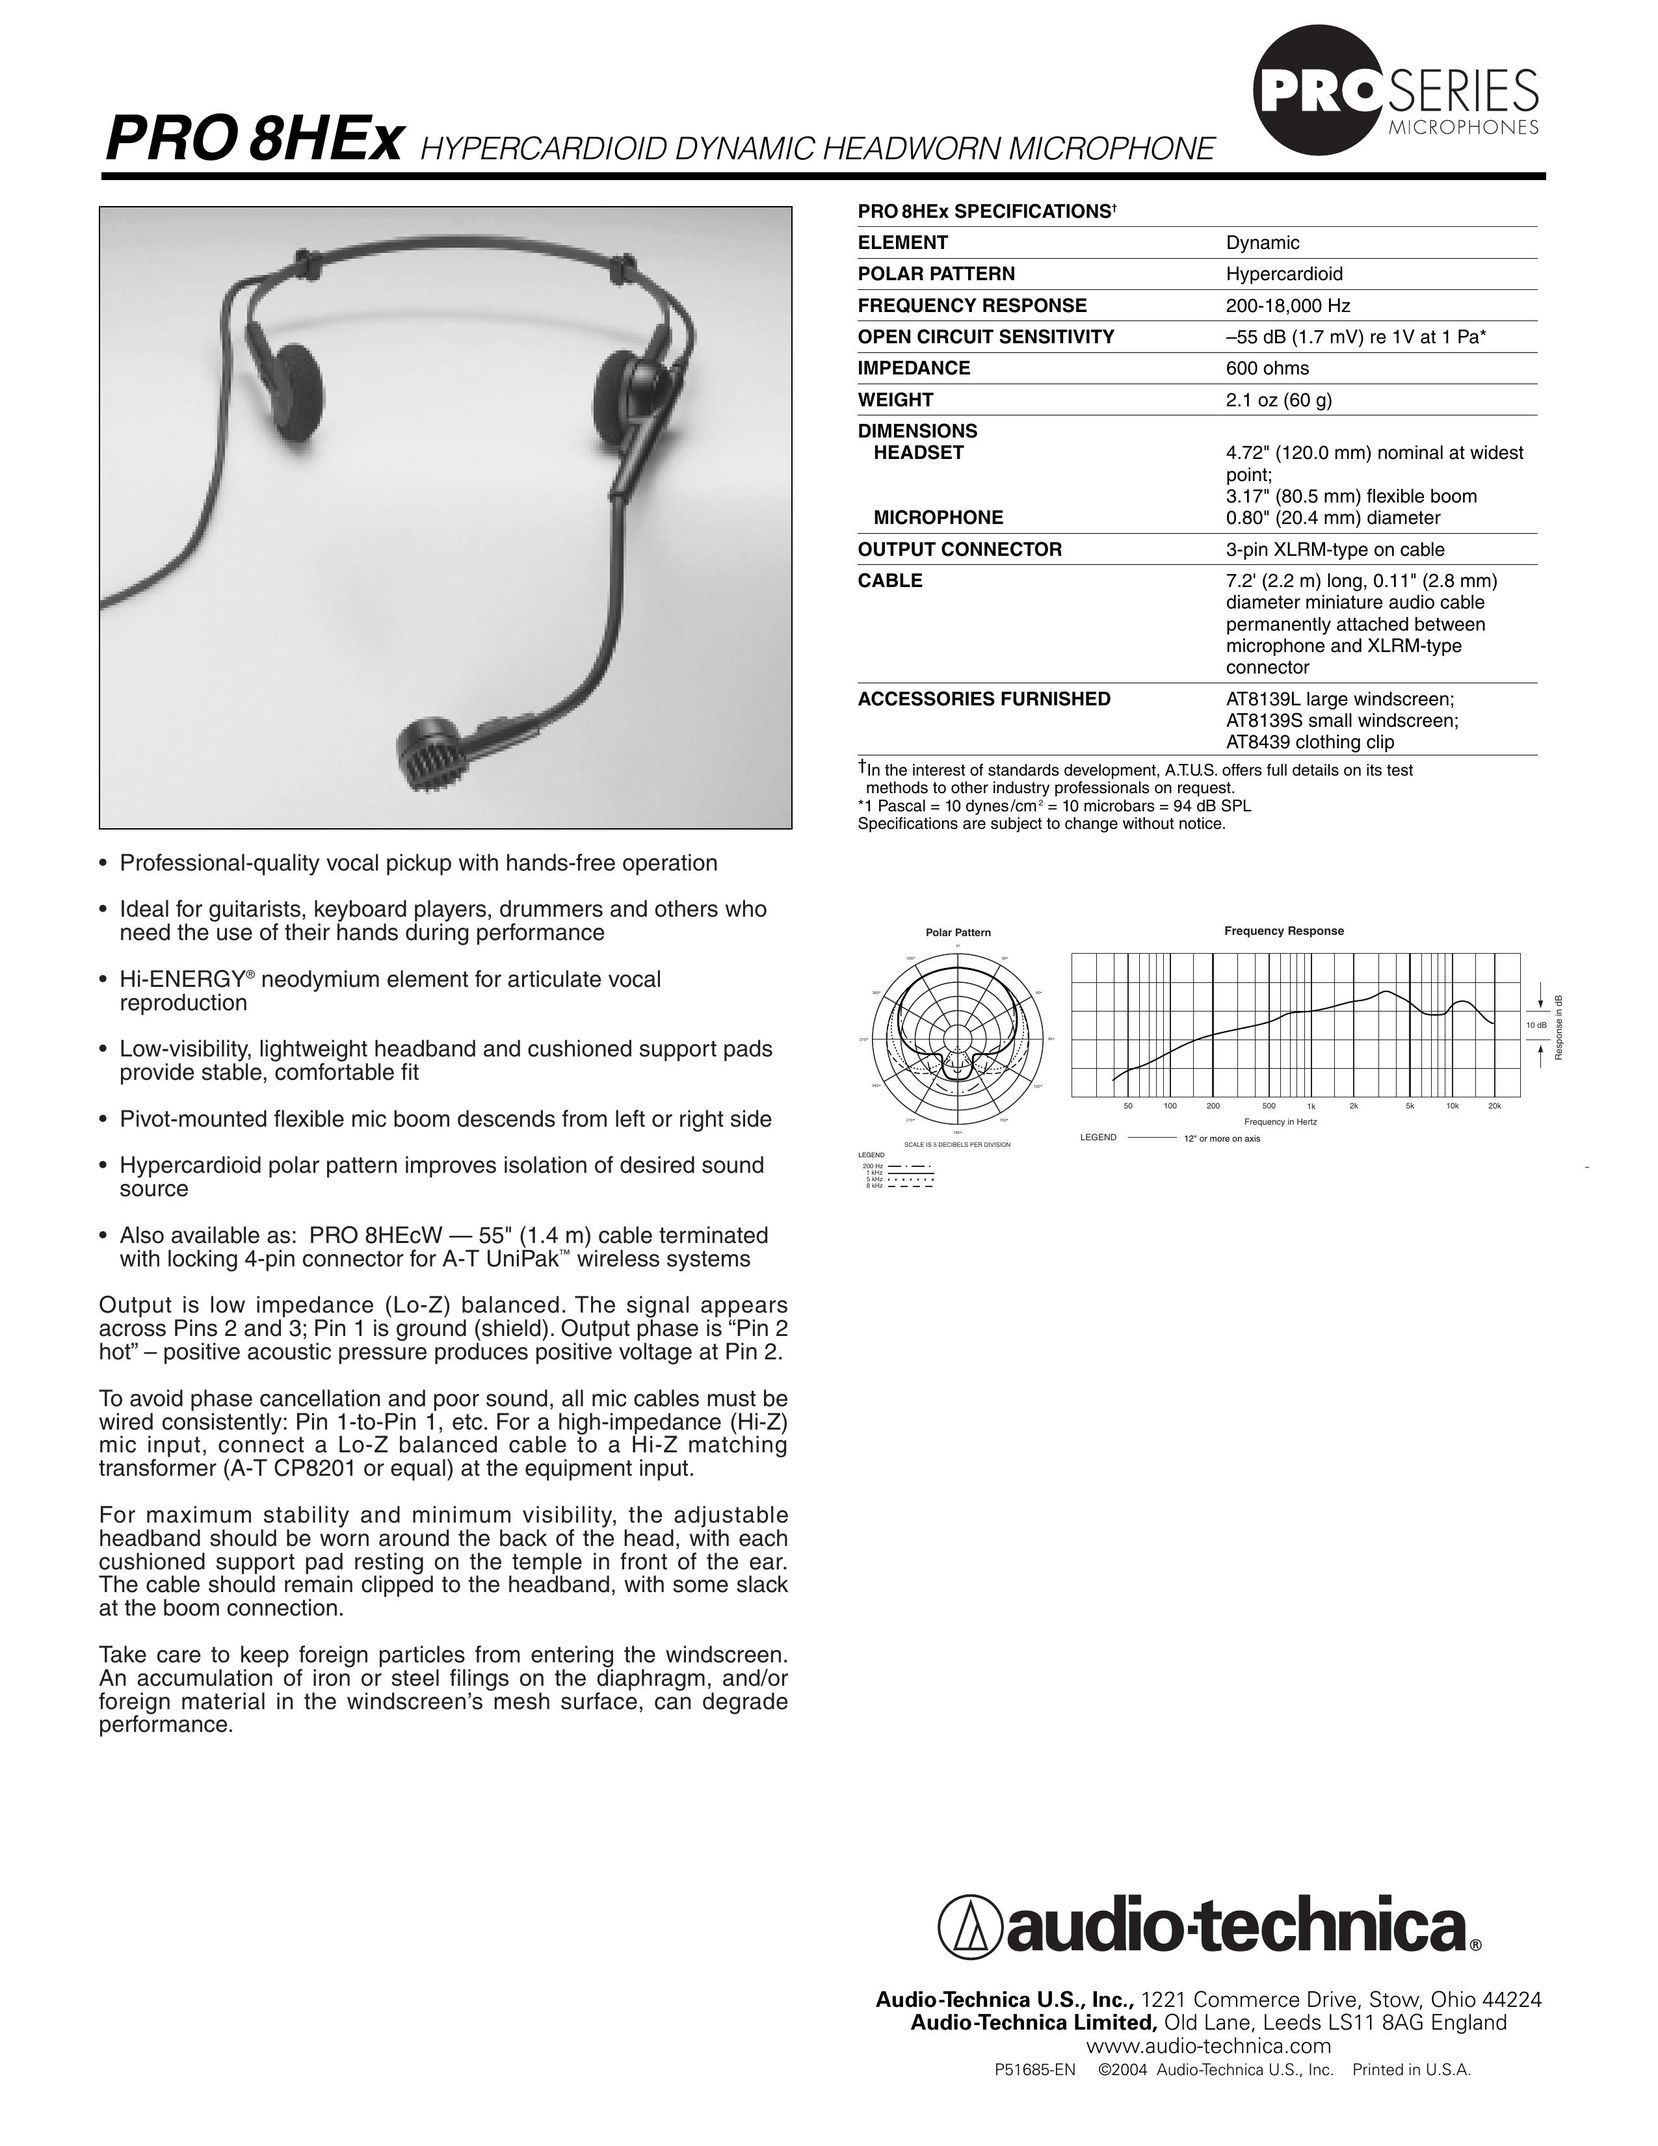 Audio-Technica PRO 8HEx Headphones User Manual